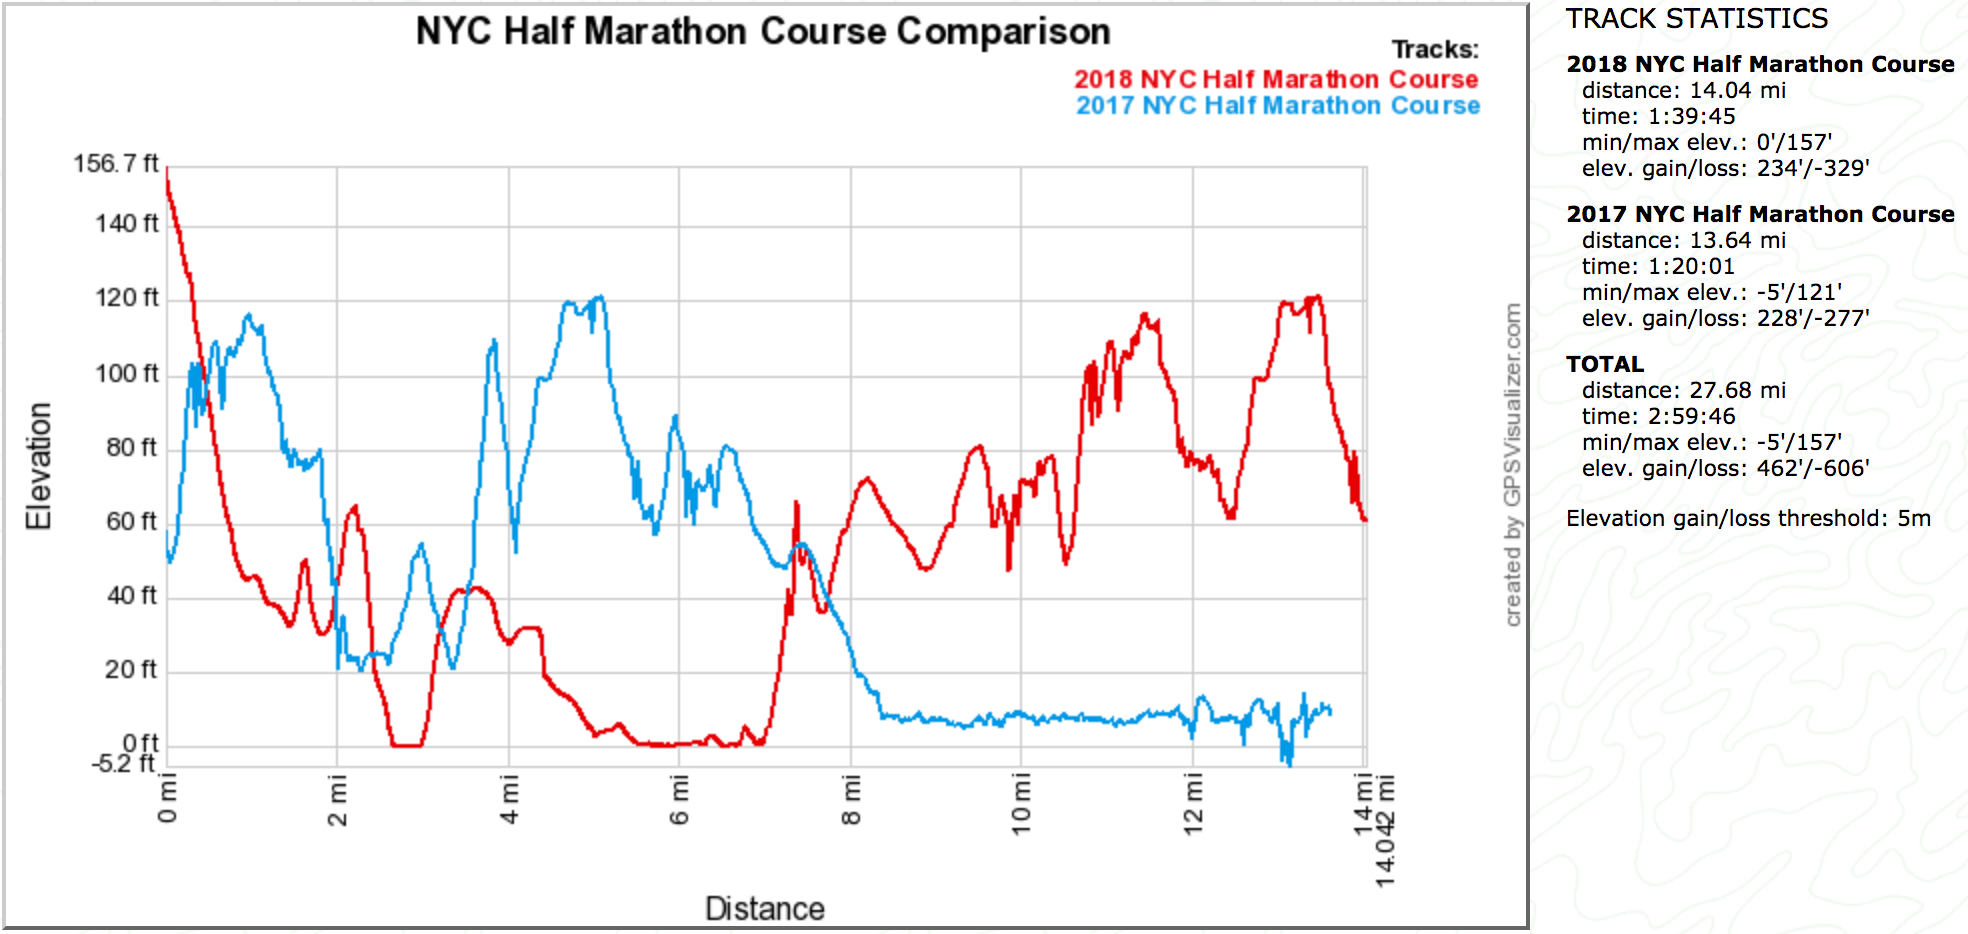 Let's Talk About the 2018 NYC Half Marathon Course